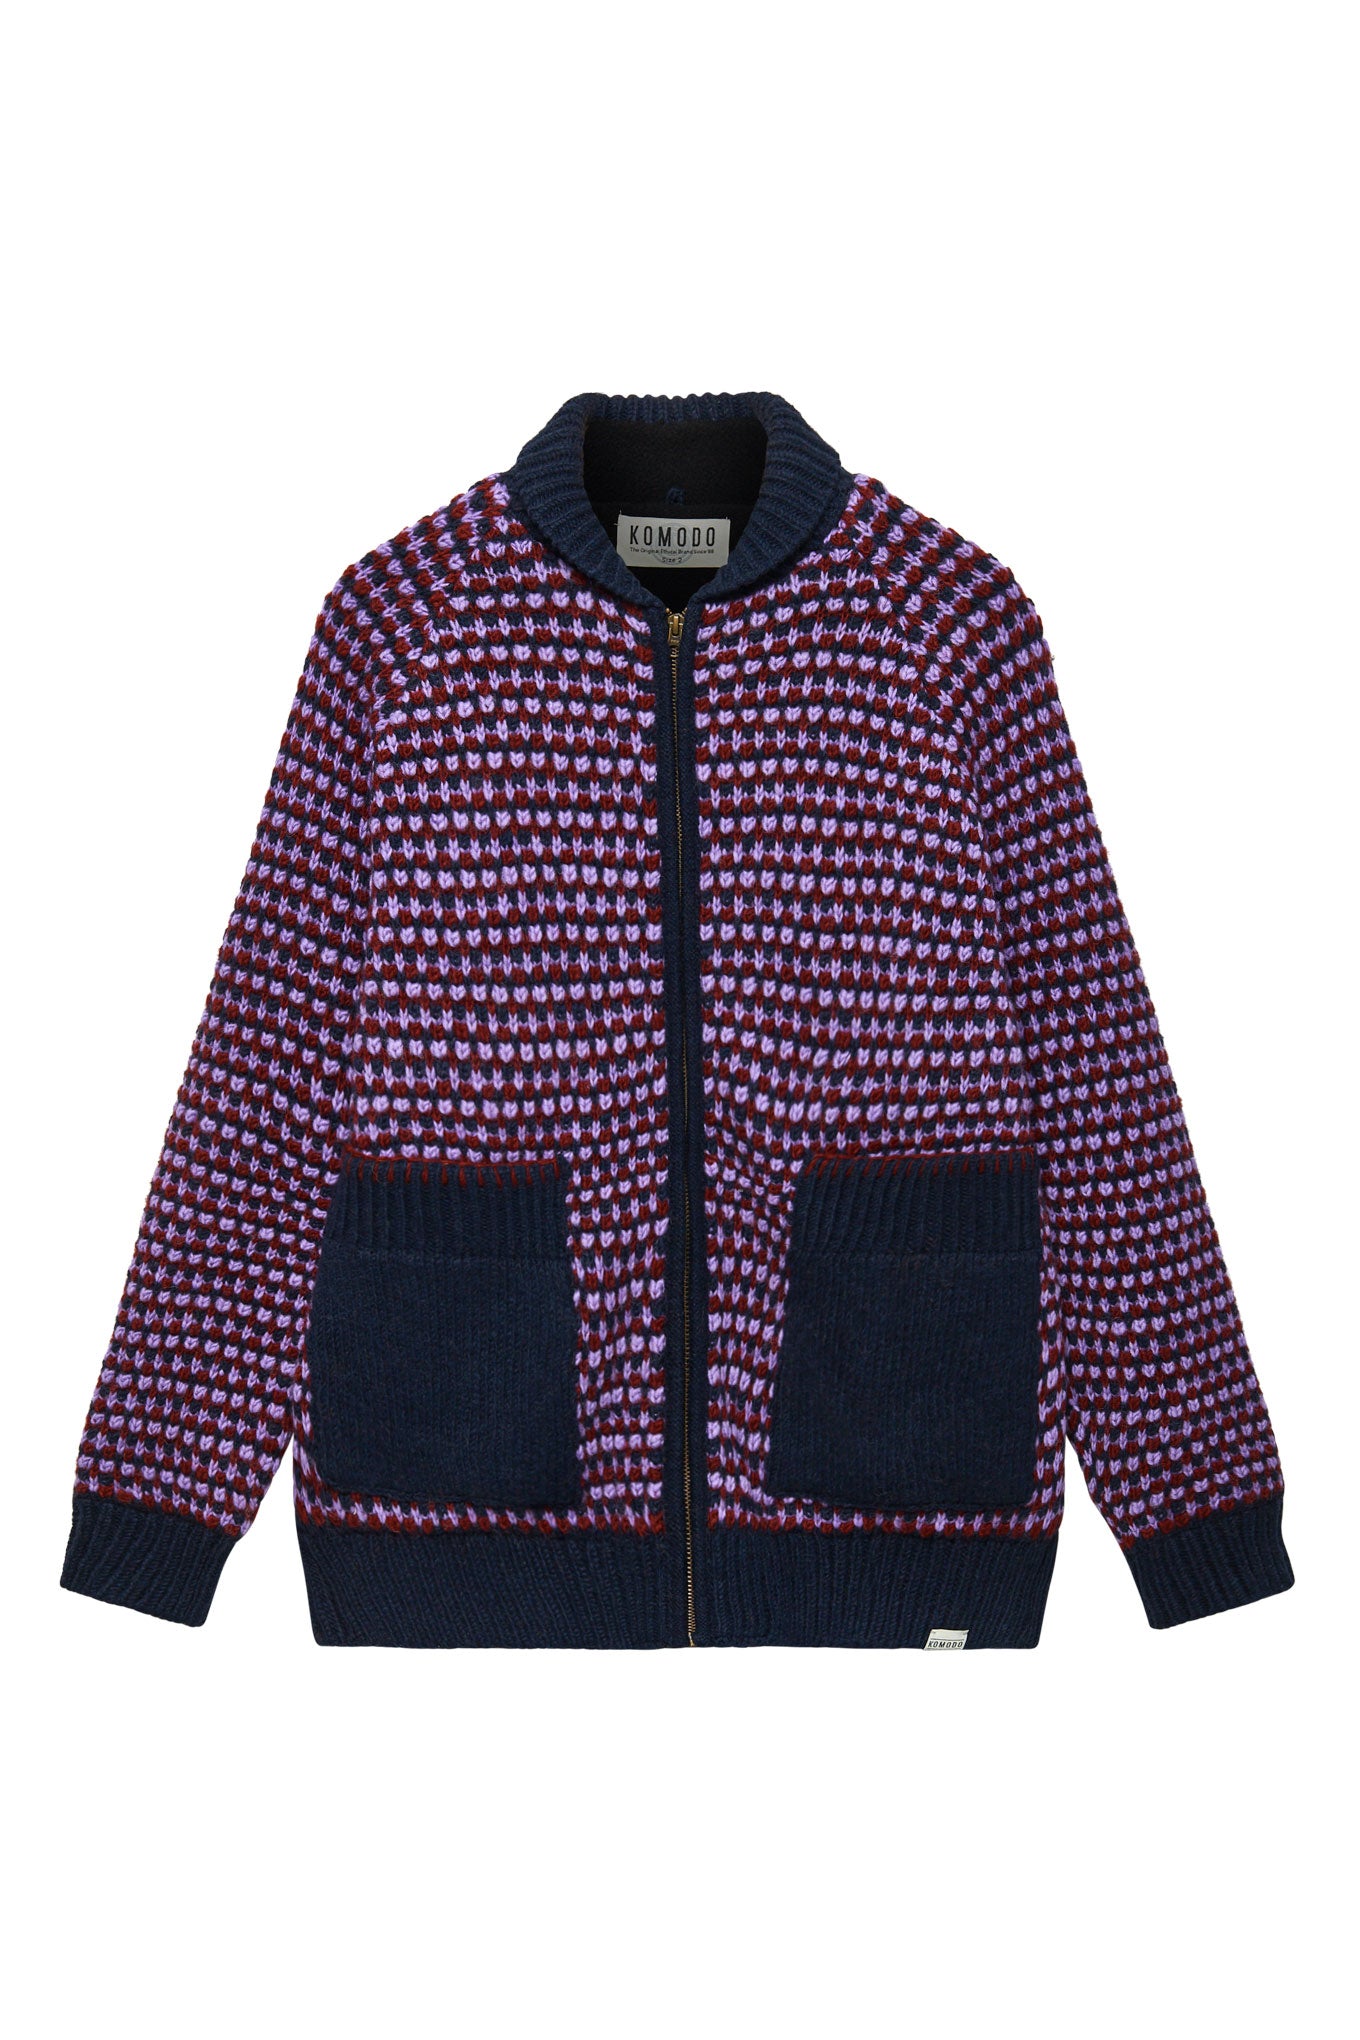 TWIST KNOT - Fleece Lined Hand Knitted Wool Jacket Lavender